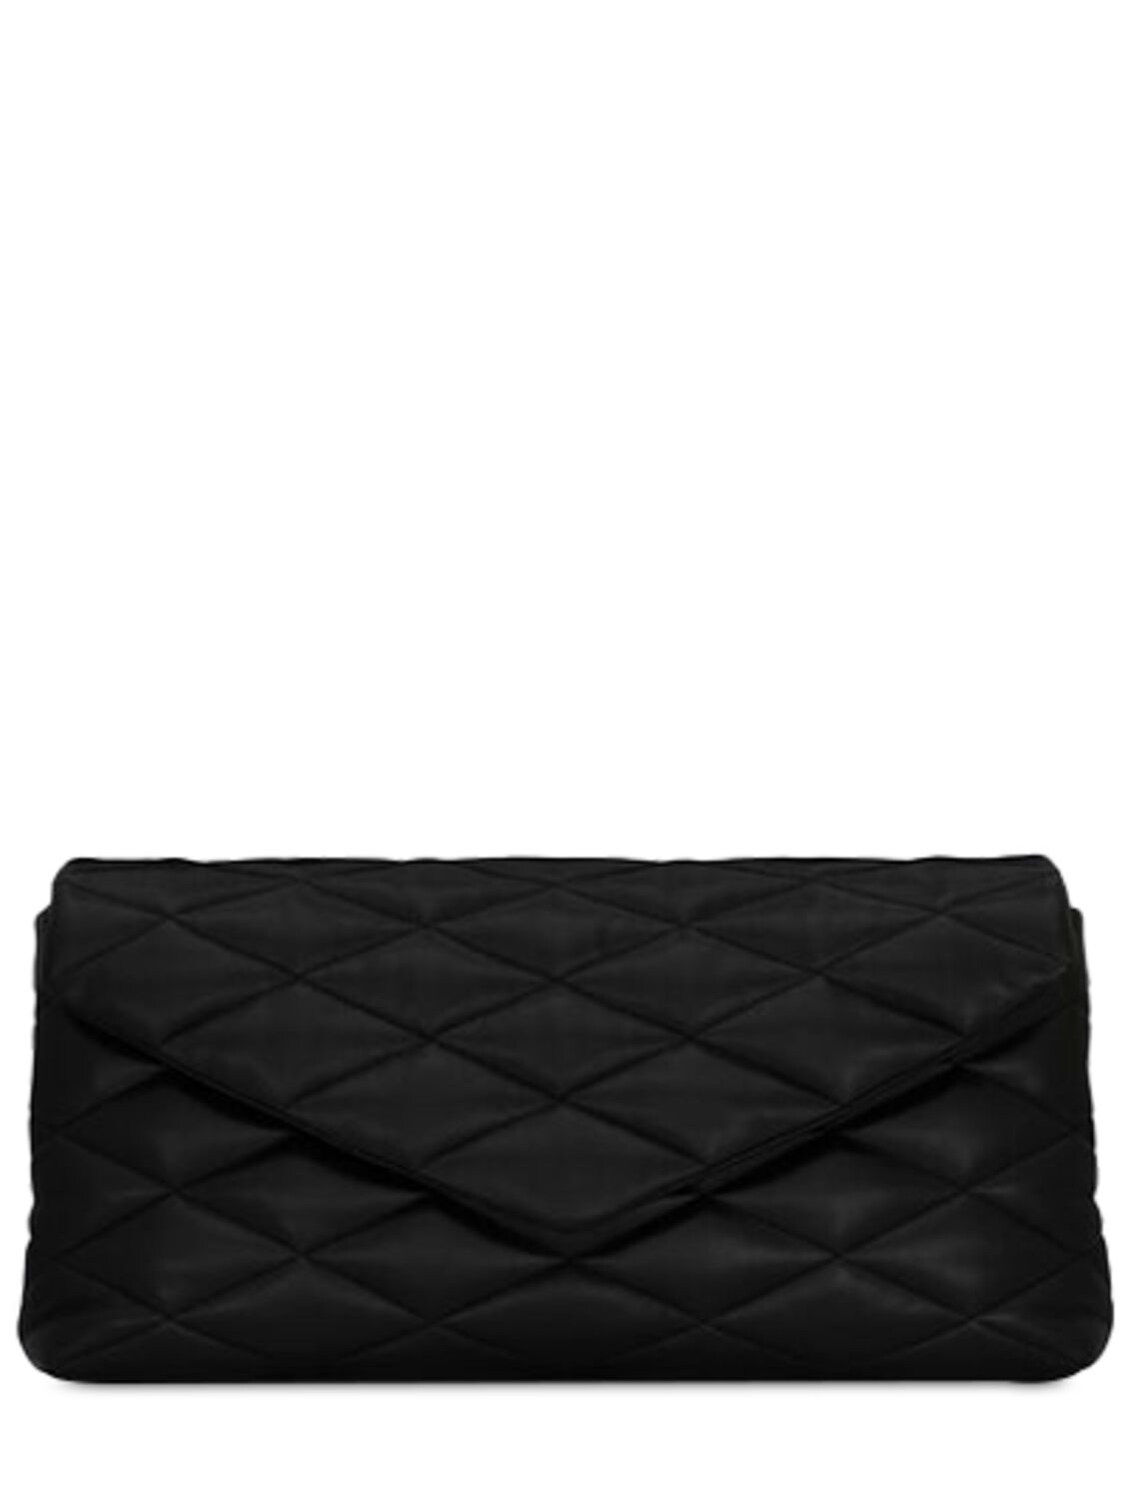 Saint Laurent Puffer Leather Sade Clutch In 黑色 | ModeSens